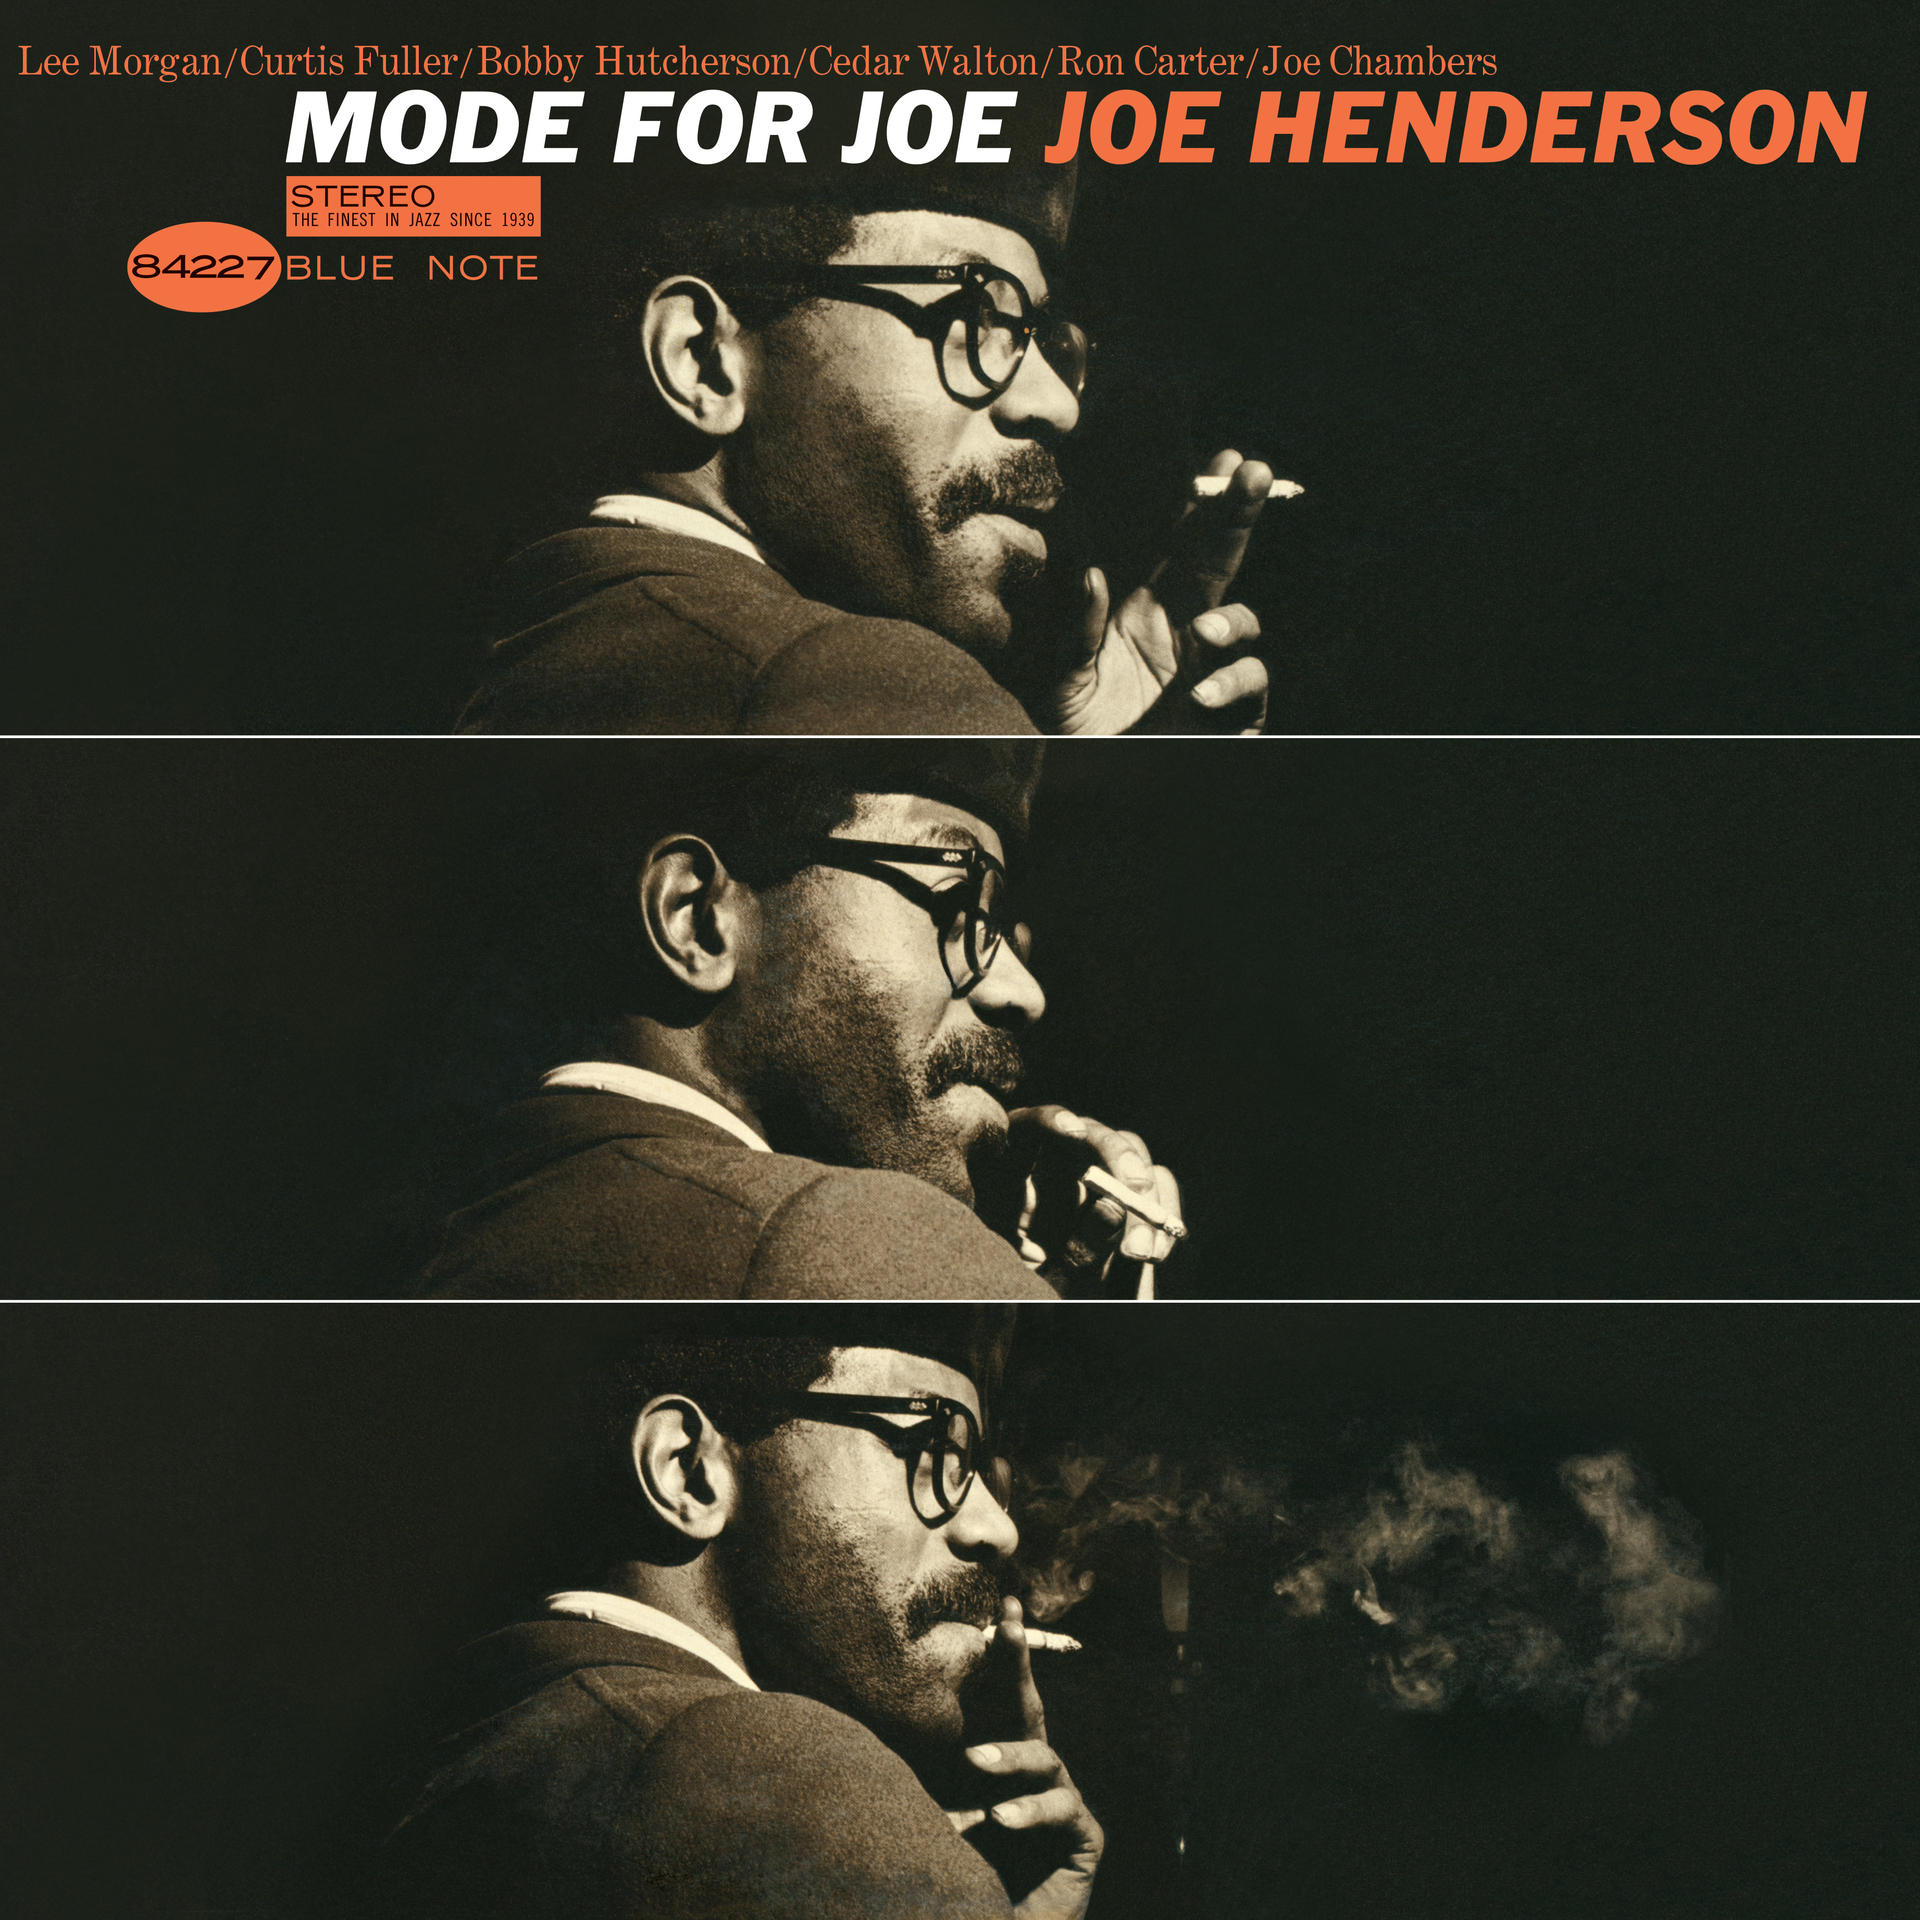 Joe (Vinyl) Mode - Joe Henderson - for